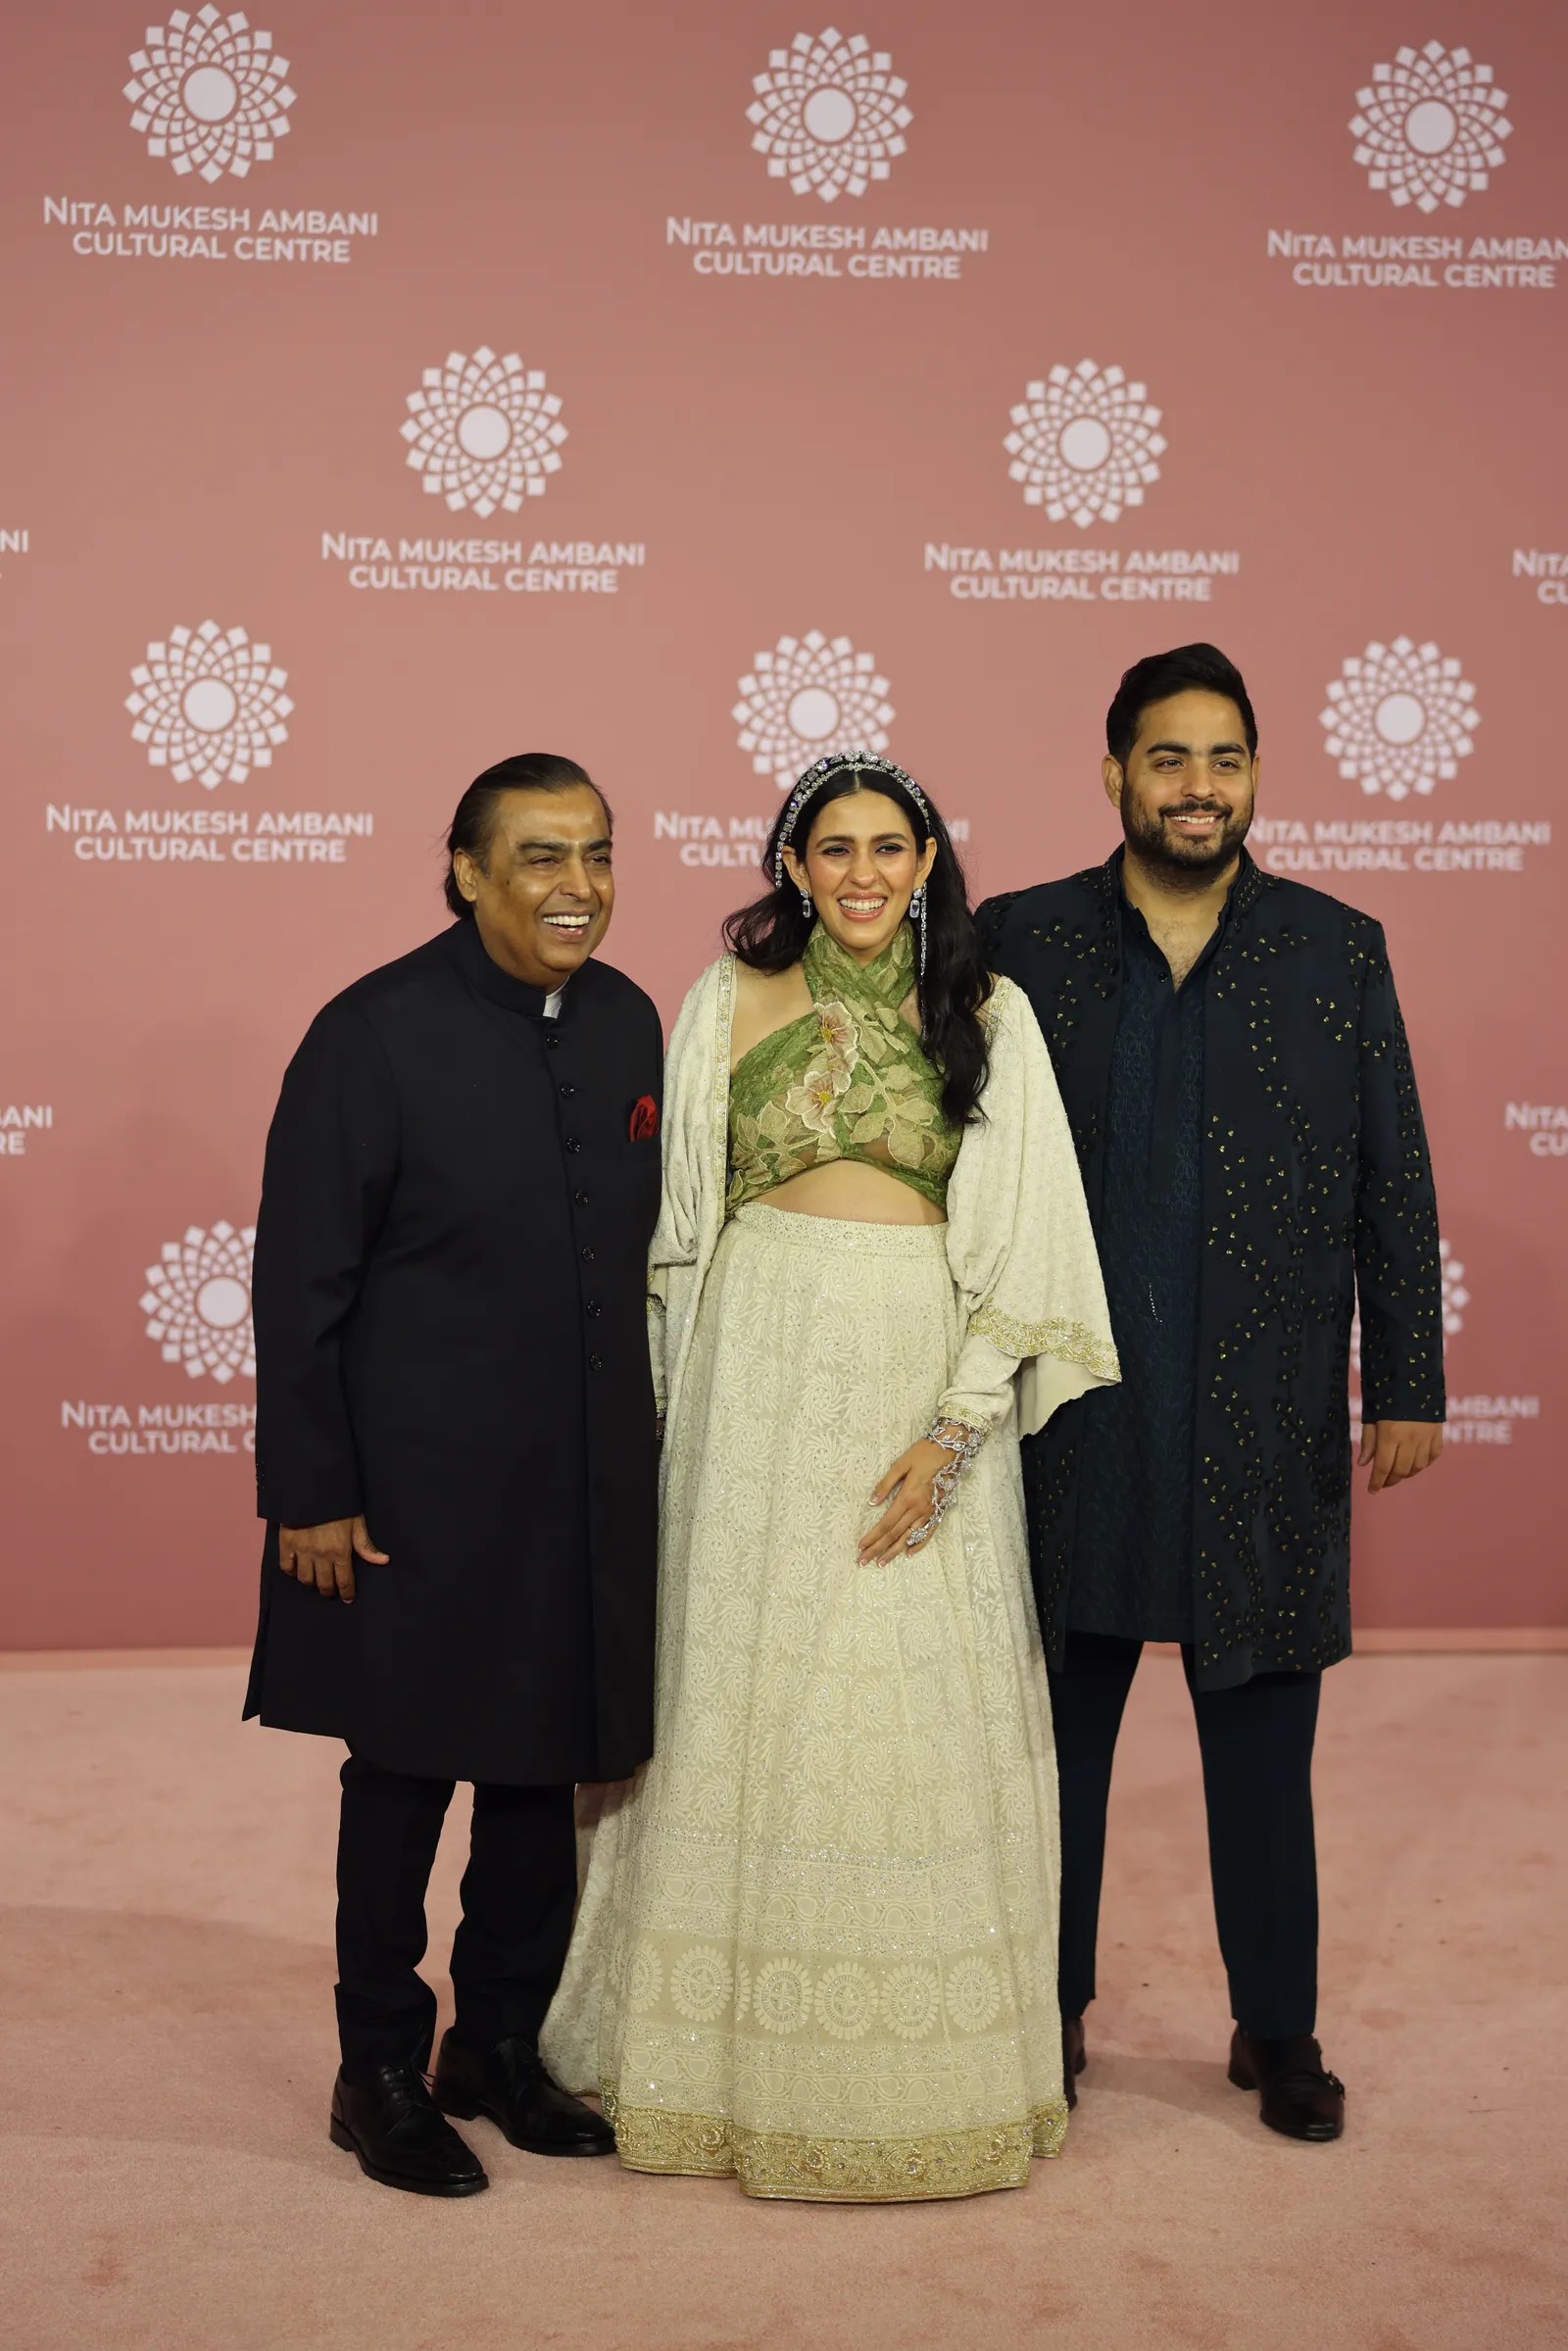 Nita Mukesh Ambani Cultural Centre Launch Day 2: Zendaya, Gigi Hadid & The Bollywood Showcase Peak Indian Fashion